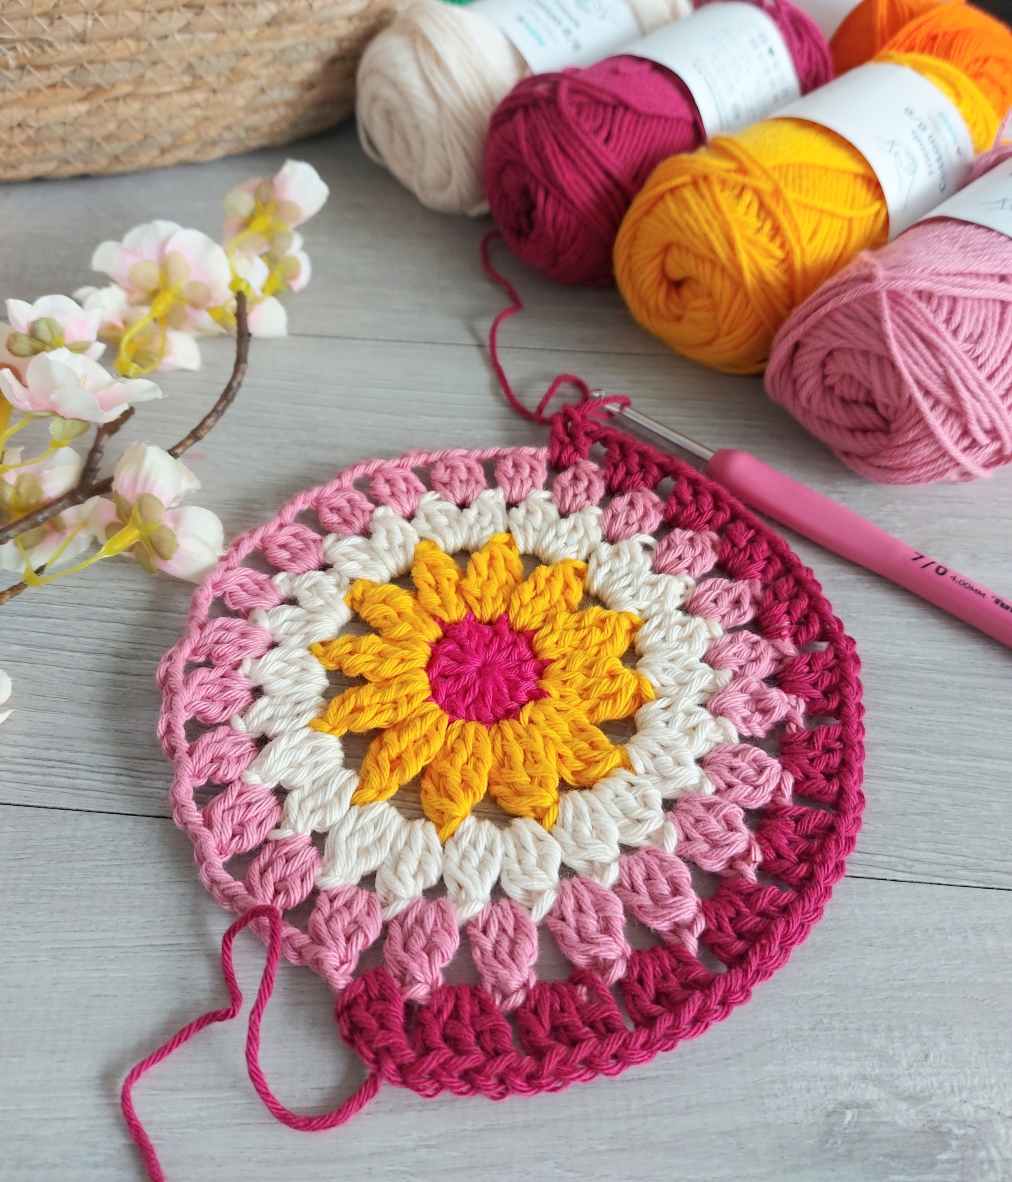 yarn and crochet on a desk